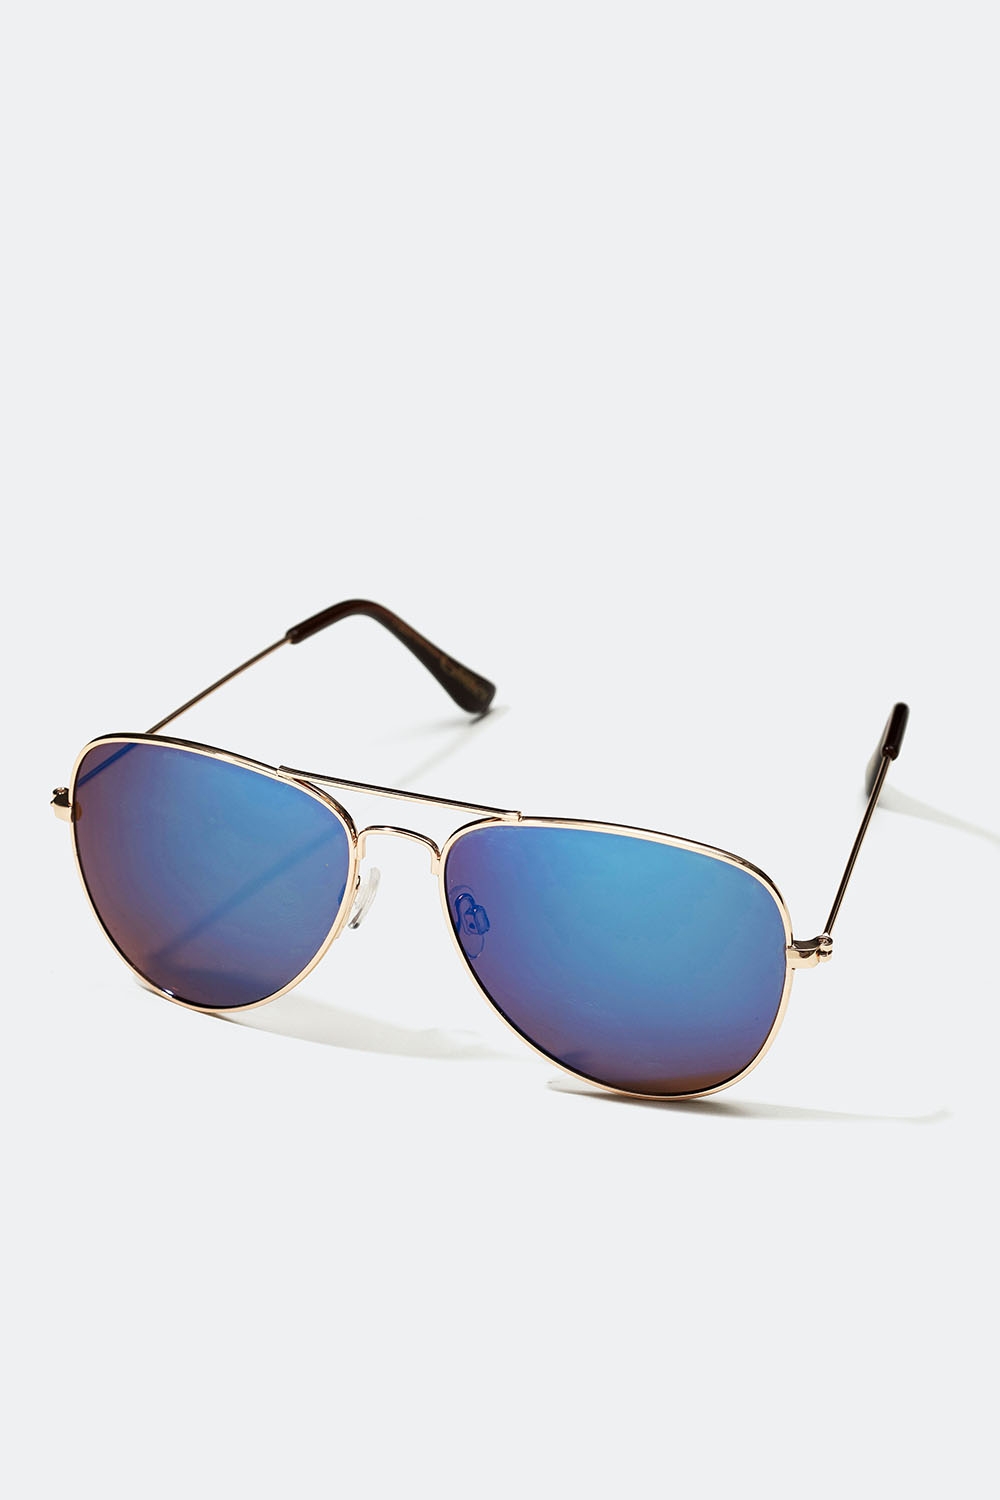 Pilotsolbriller med blåtonede glass i gruppen Accessories / Solbriller hos Glitter (176001047400)